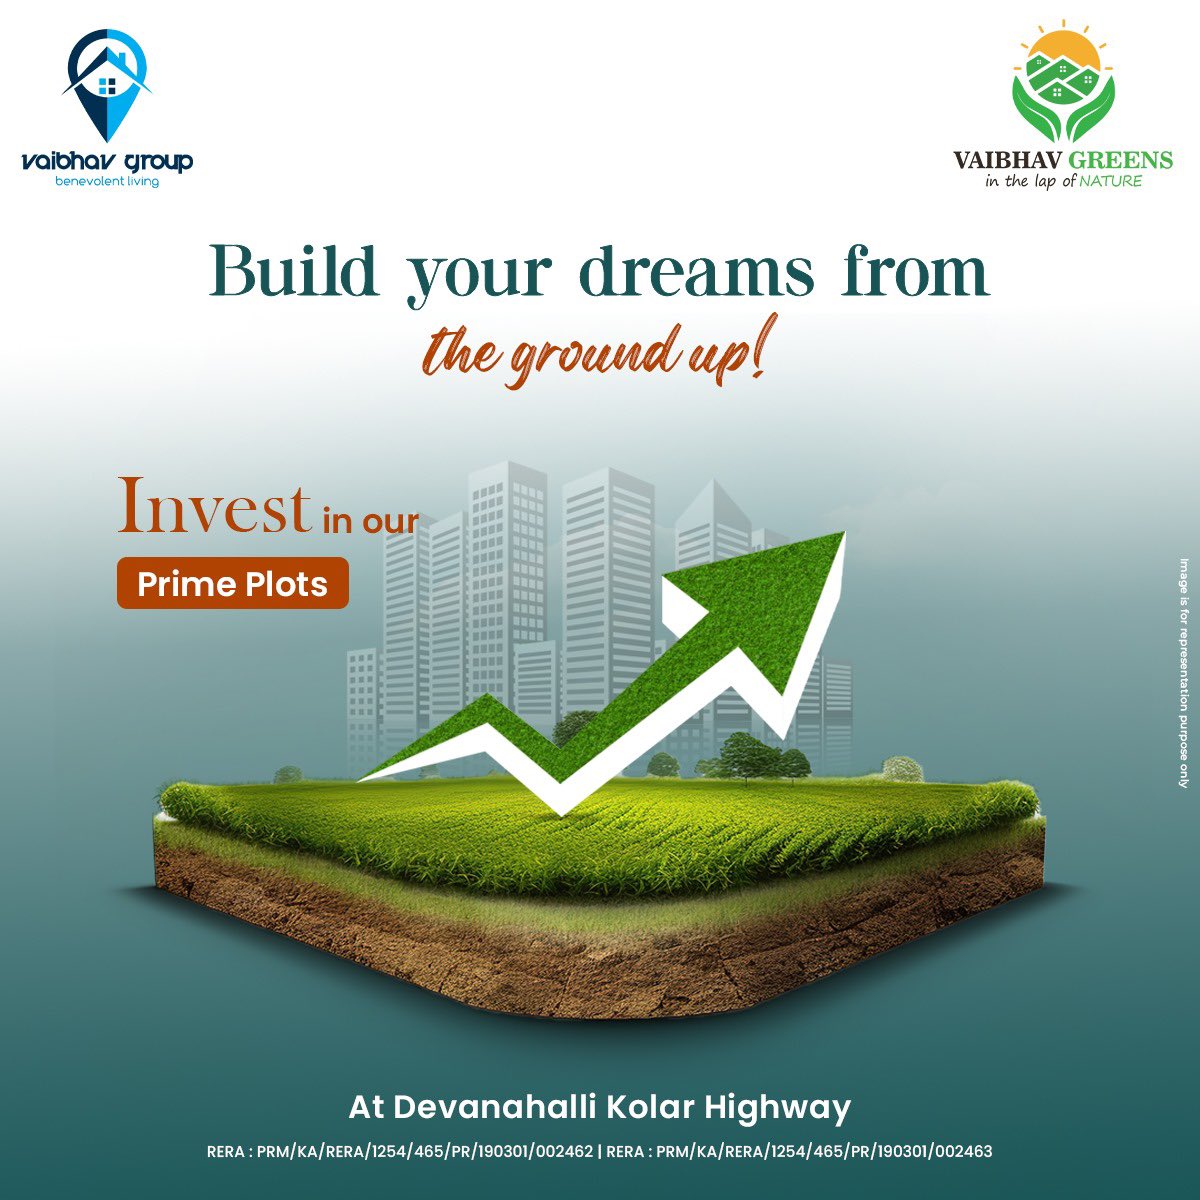 Build your dreams. Invest in premium villa plots at Vaibhav Greens - Commencing at ₹1,300/sqft* along Devanahalli Kolar Highway.

#VaibhavGroup #PlotsForSale #ResidentialPlots #LandForSale #InvestmentLand #RealEstate #PlotsInBangalore #Bengaluru #Karnataka #investinland